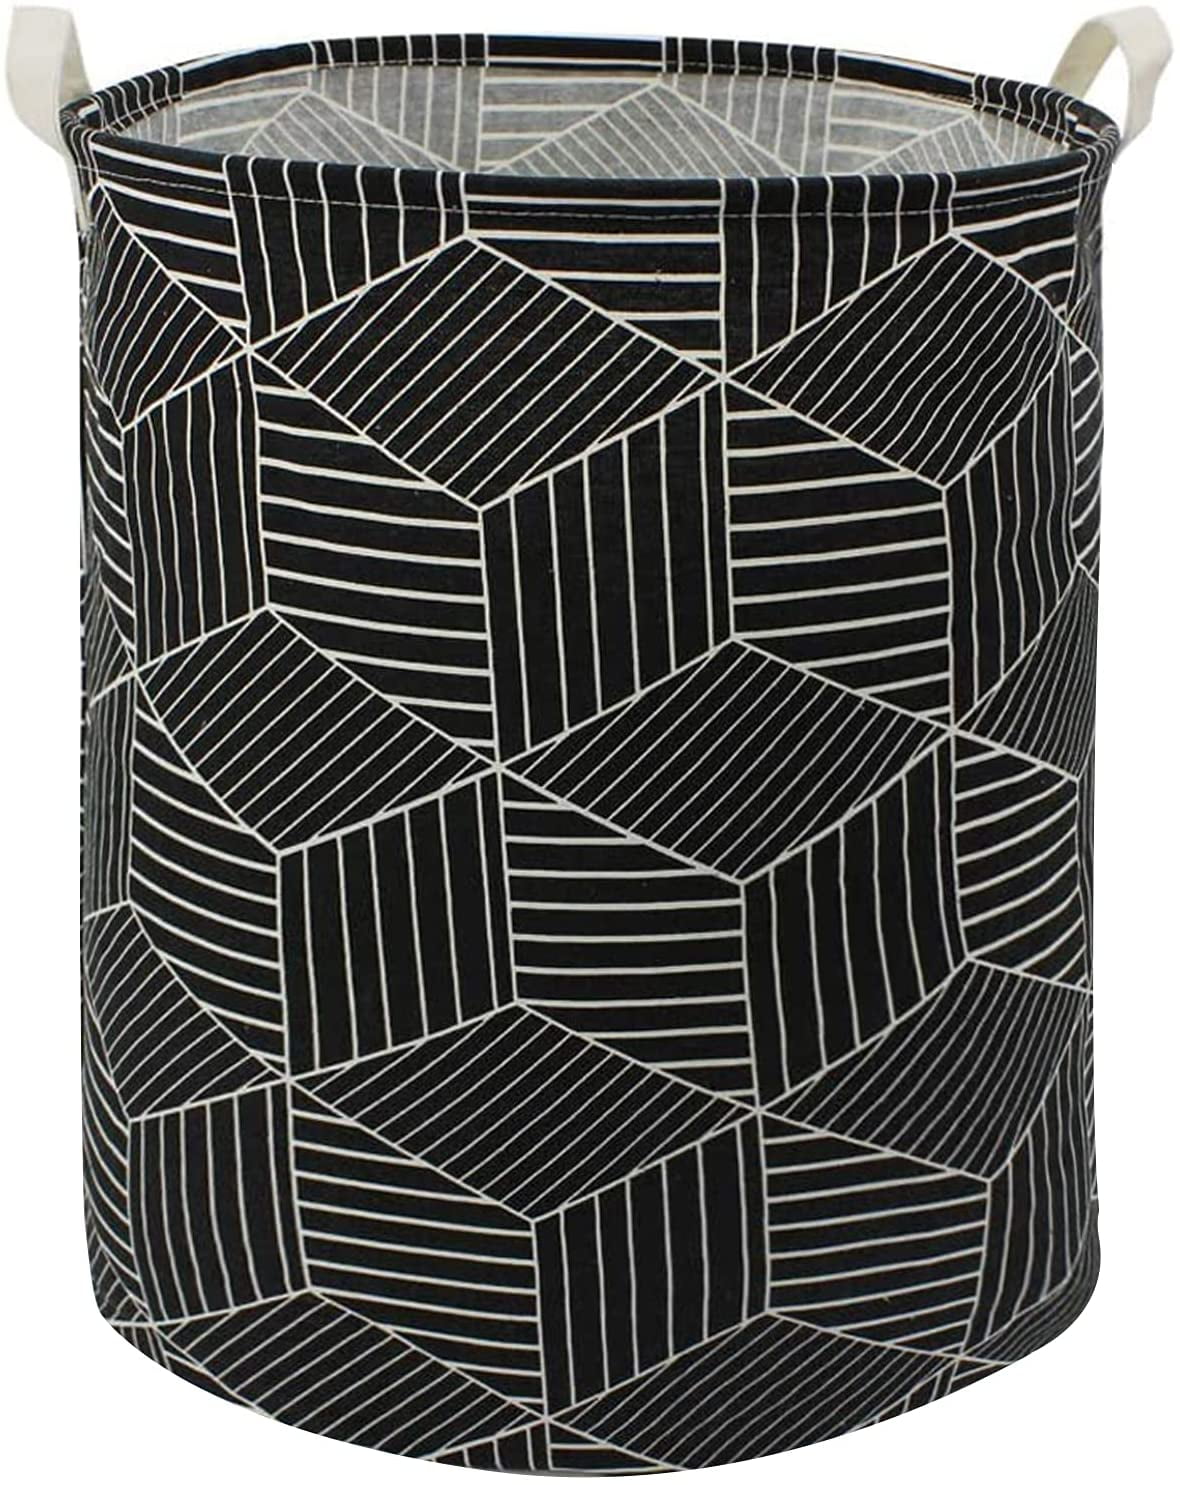 50*40cm Foldable Canvas Washing Clothes Laundry Basket Bag Hamper Storage Holder 